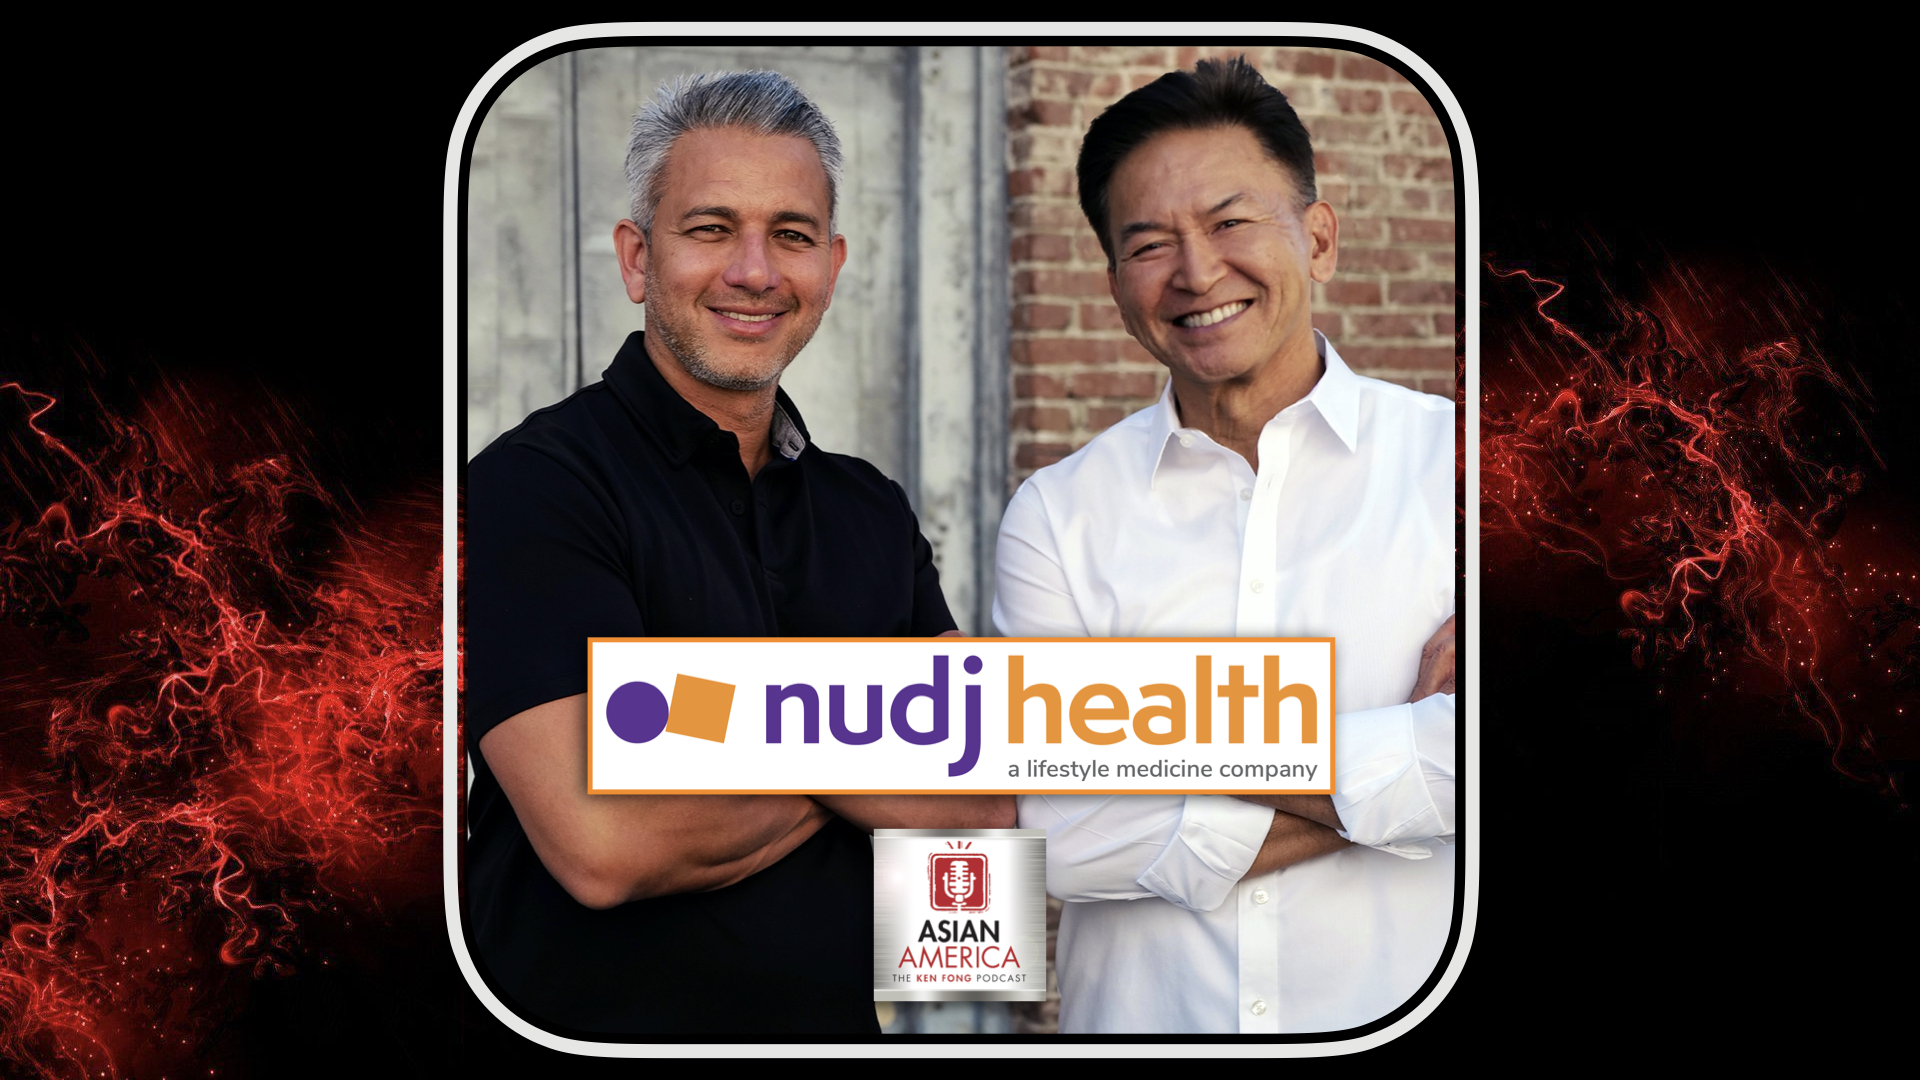 Ep 392: Yuri Sudhakar & Rick Abe on Nudj Health